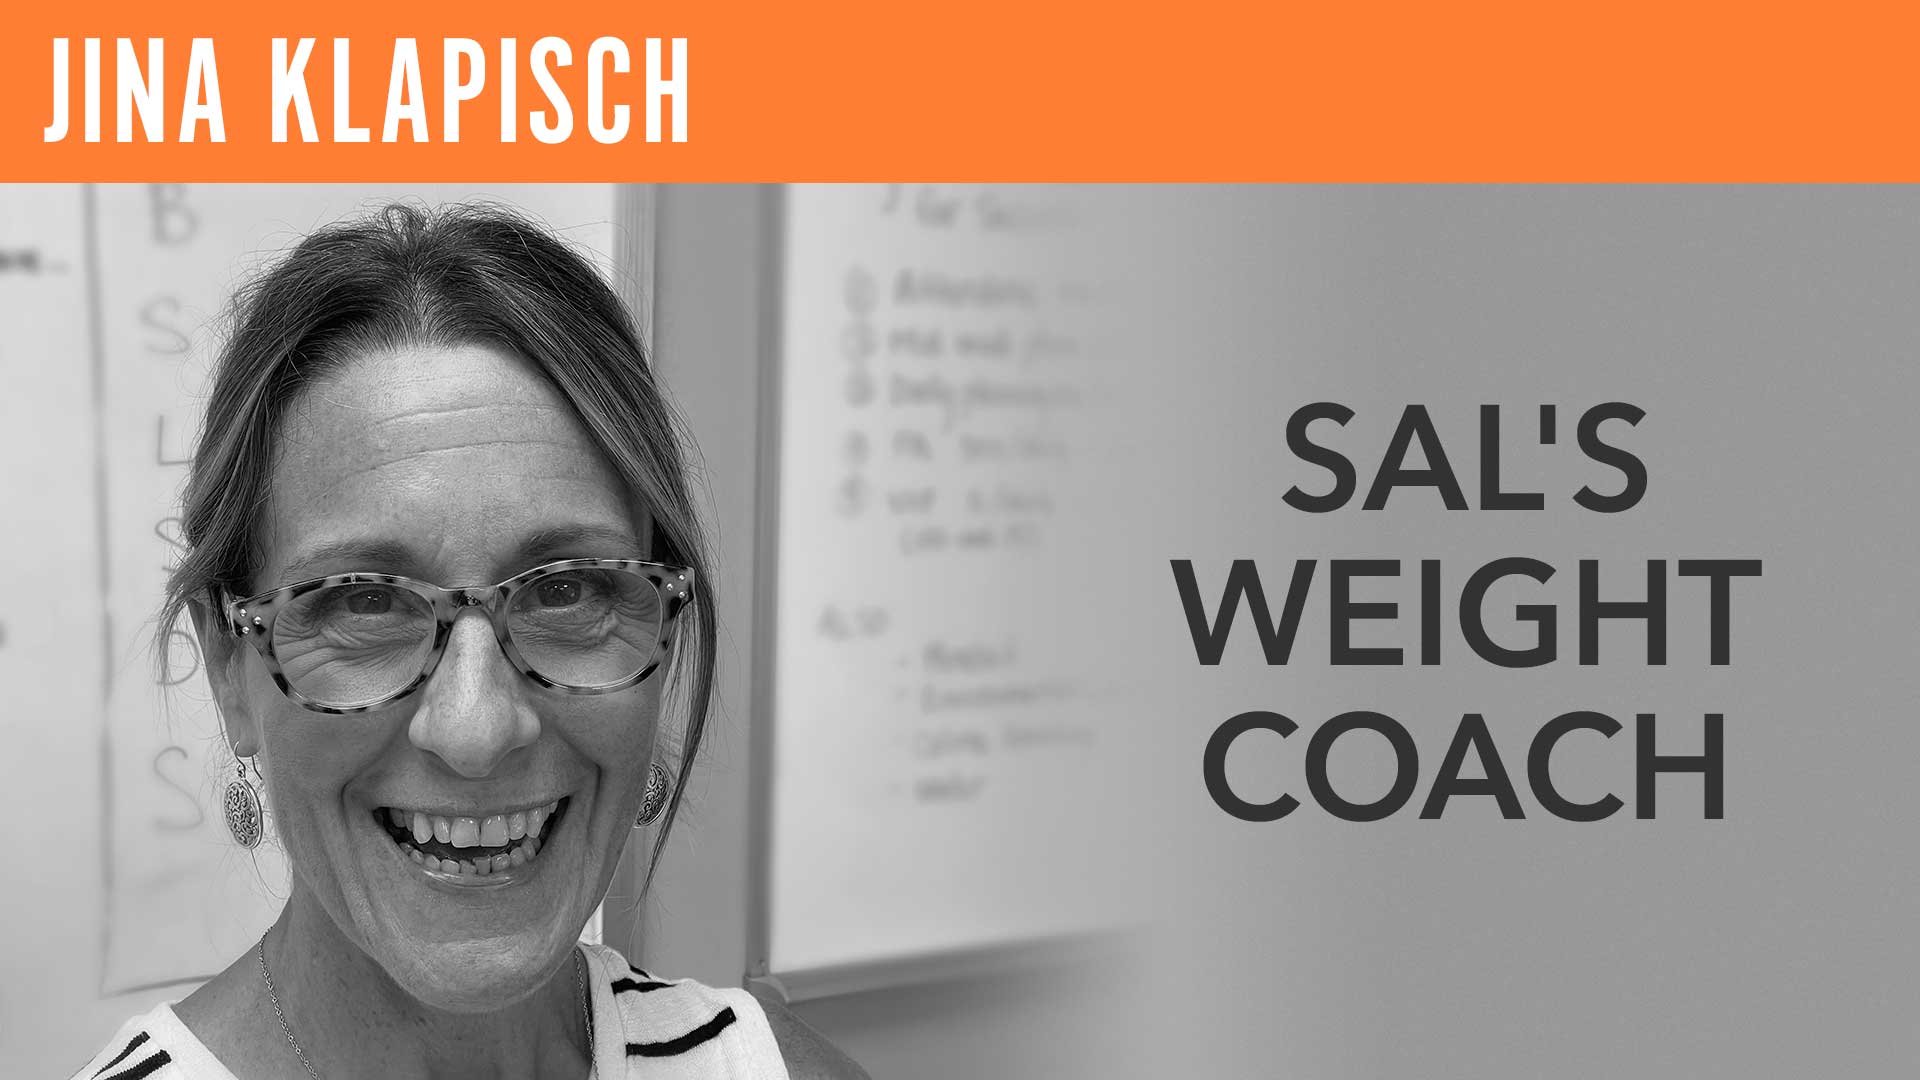 Jina Klapisch, "Sal's Weight Coach"